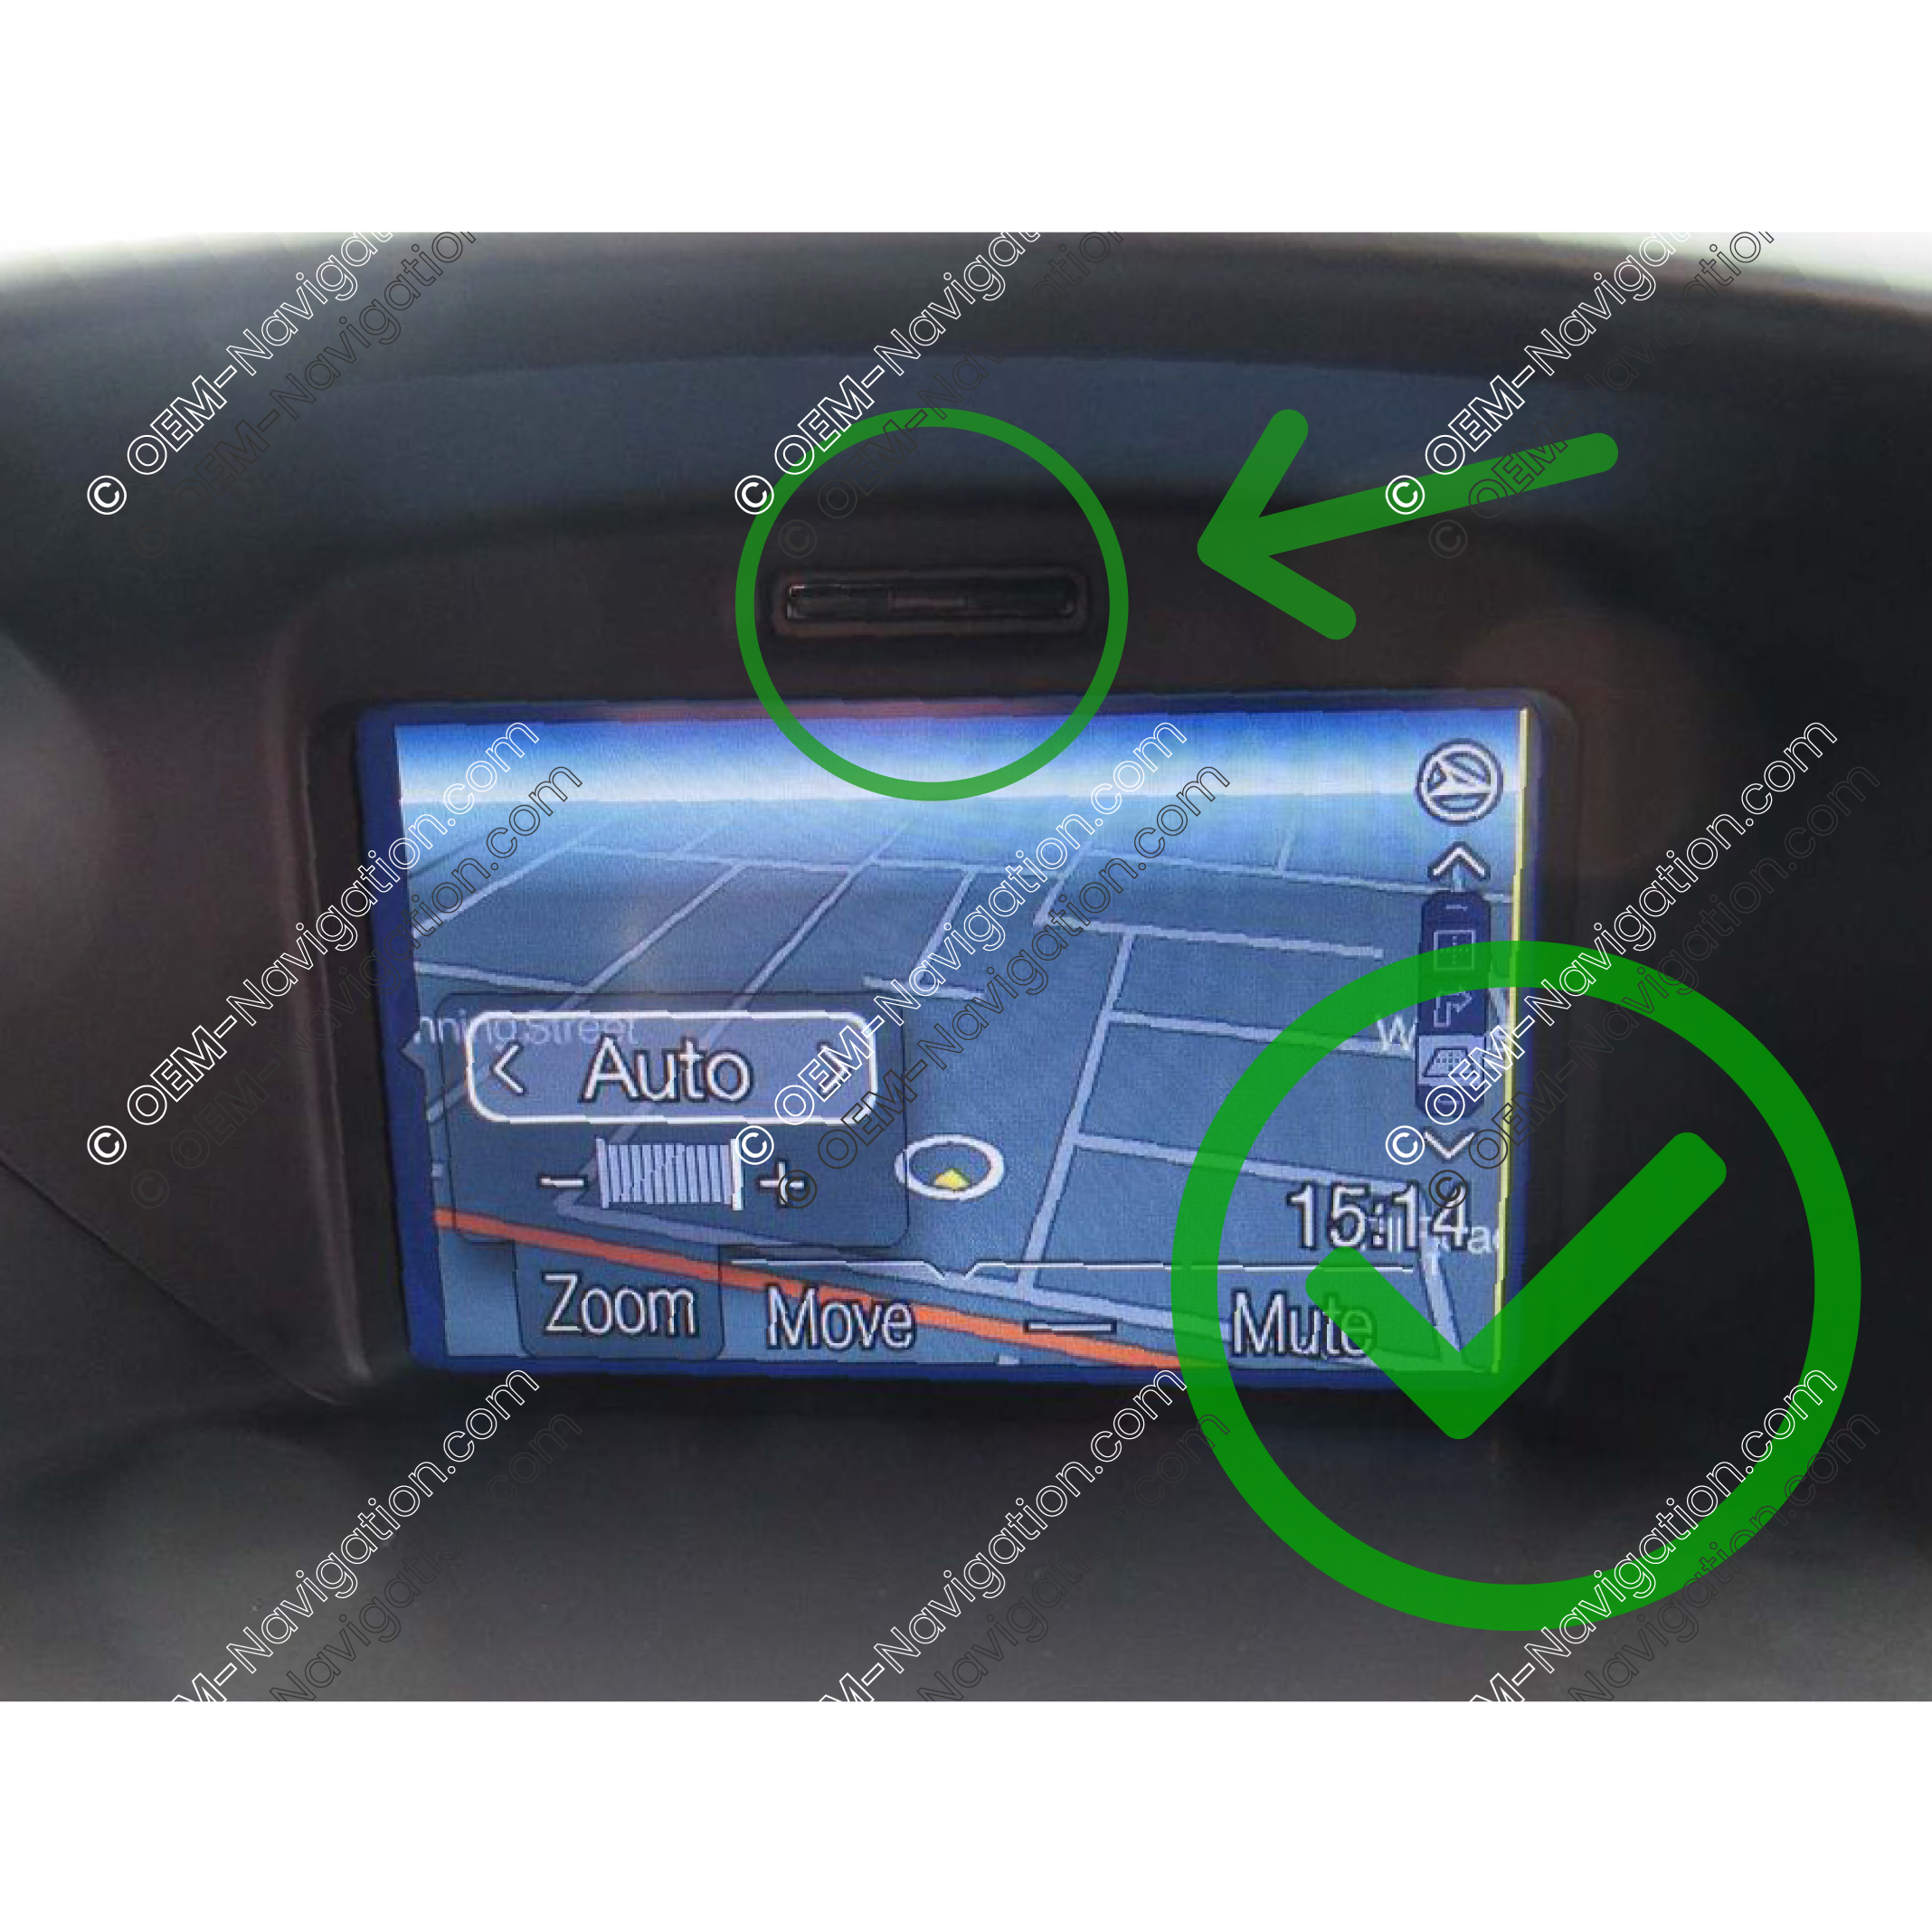 Ford MFD V12 2022 Europe SD Card Sat Nav Map Update | 2608624 / i2013447